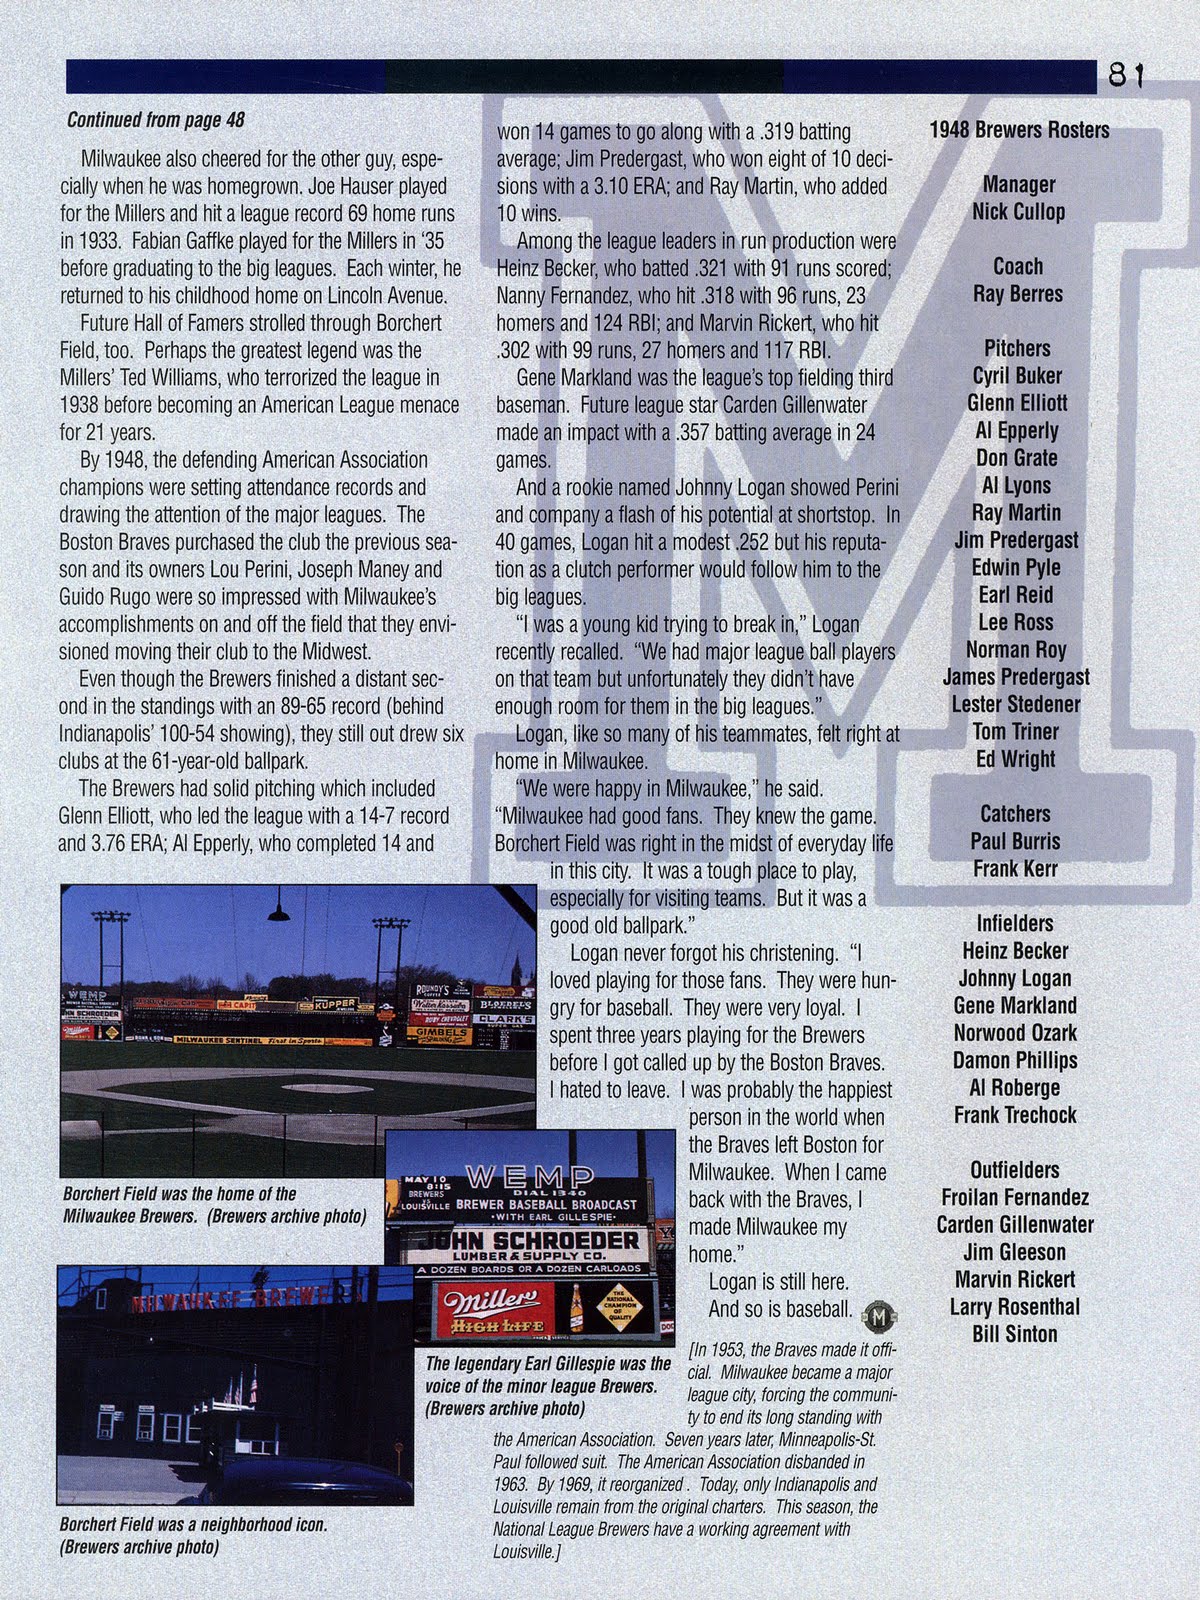 Tampa Bay Devil Rays Magazine -- Vol. 1 No. 3 (June 1998)